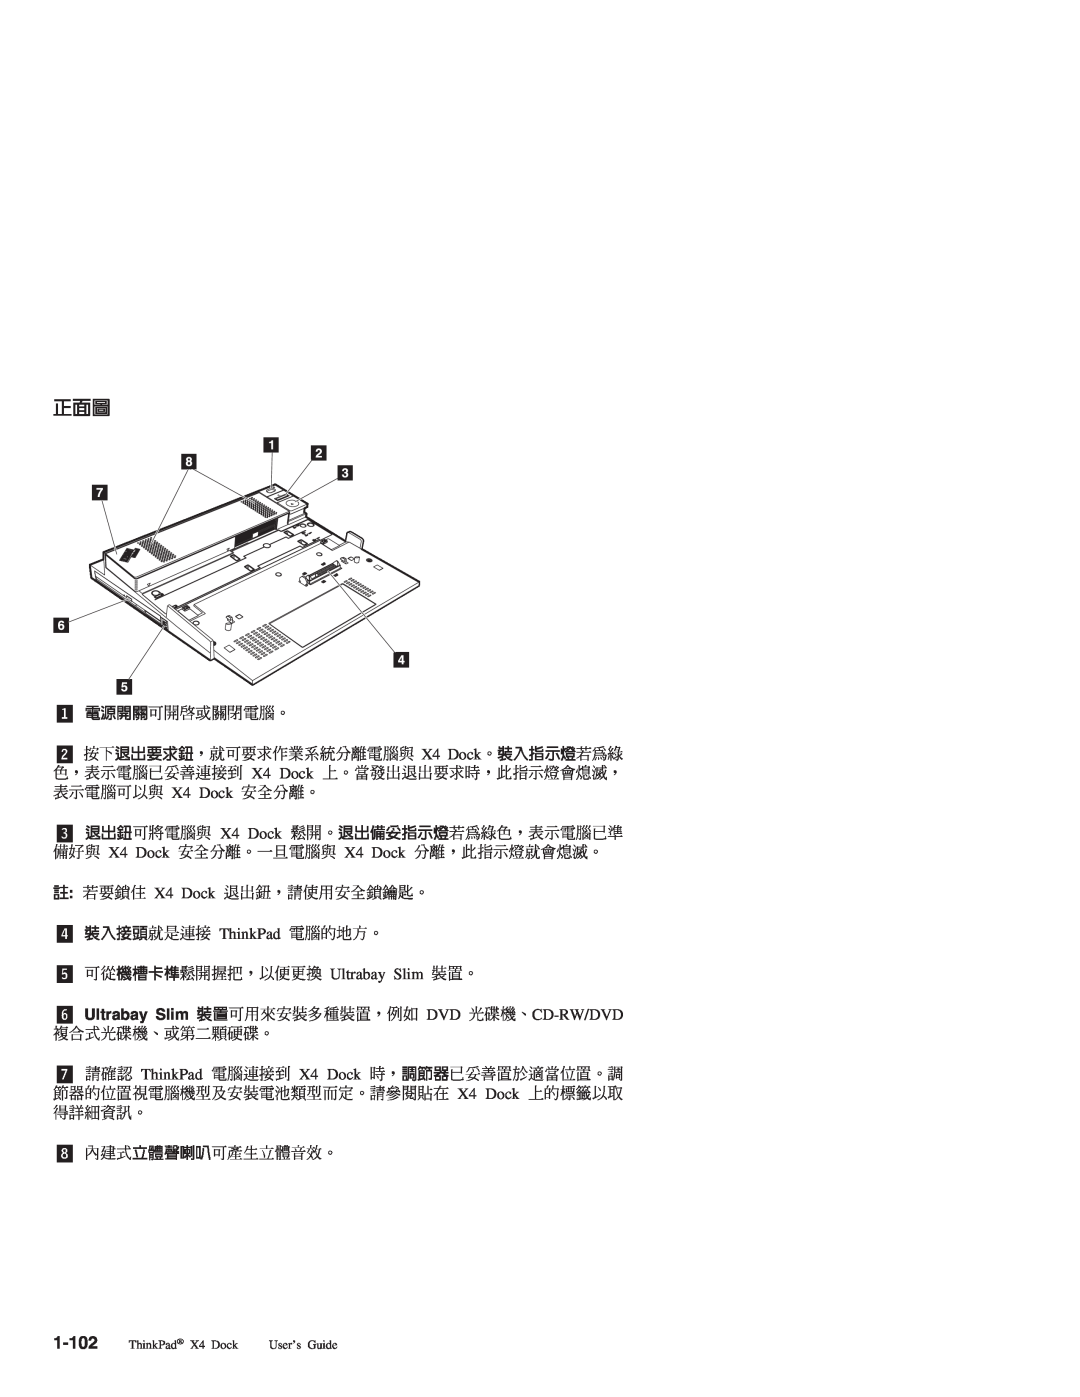 IBM manual 1-102, 6 Ultrabay Slim, ThinkPad X4 Dock, User’s Guide 